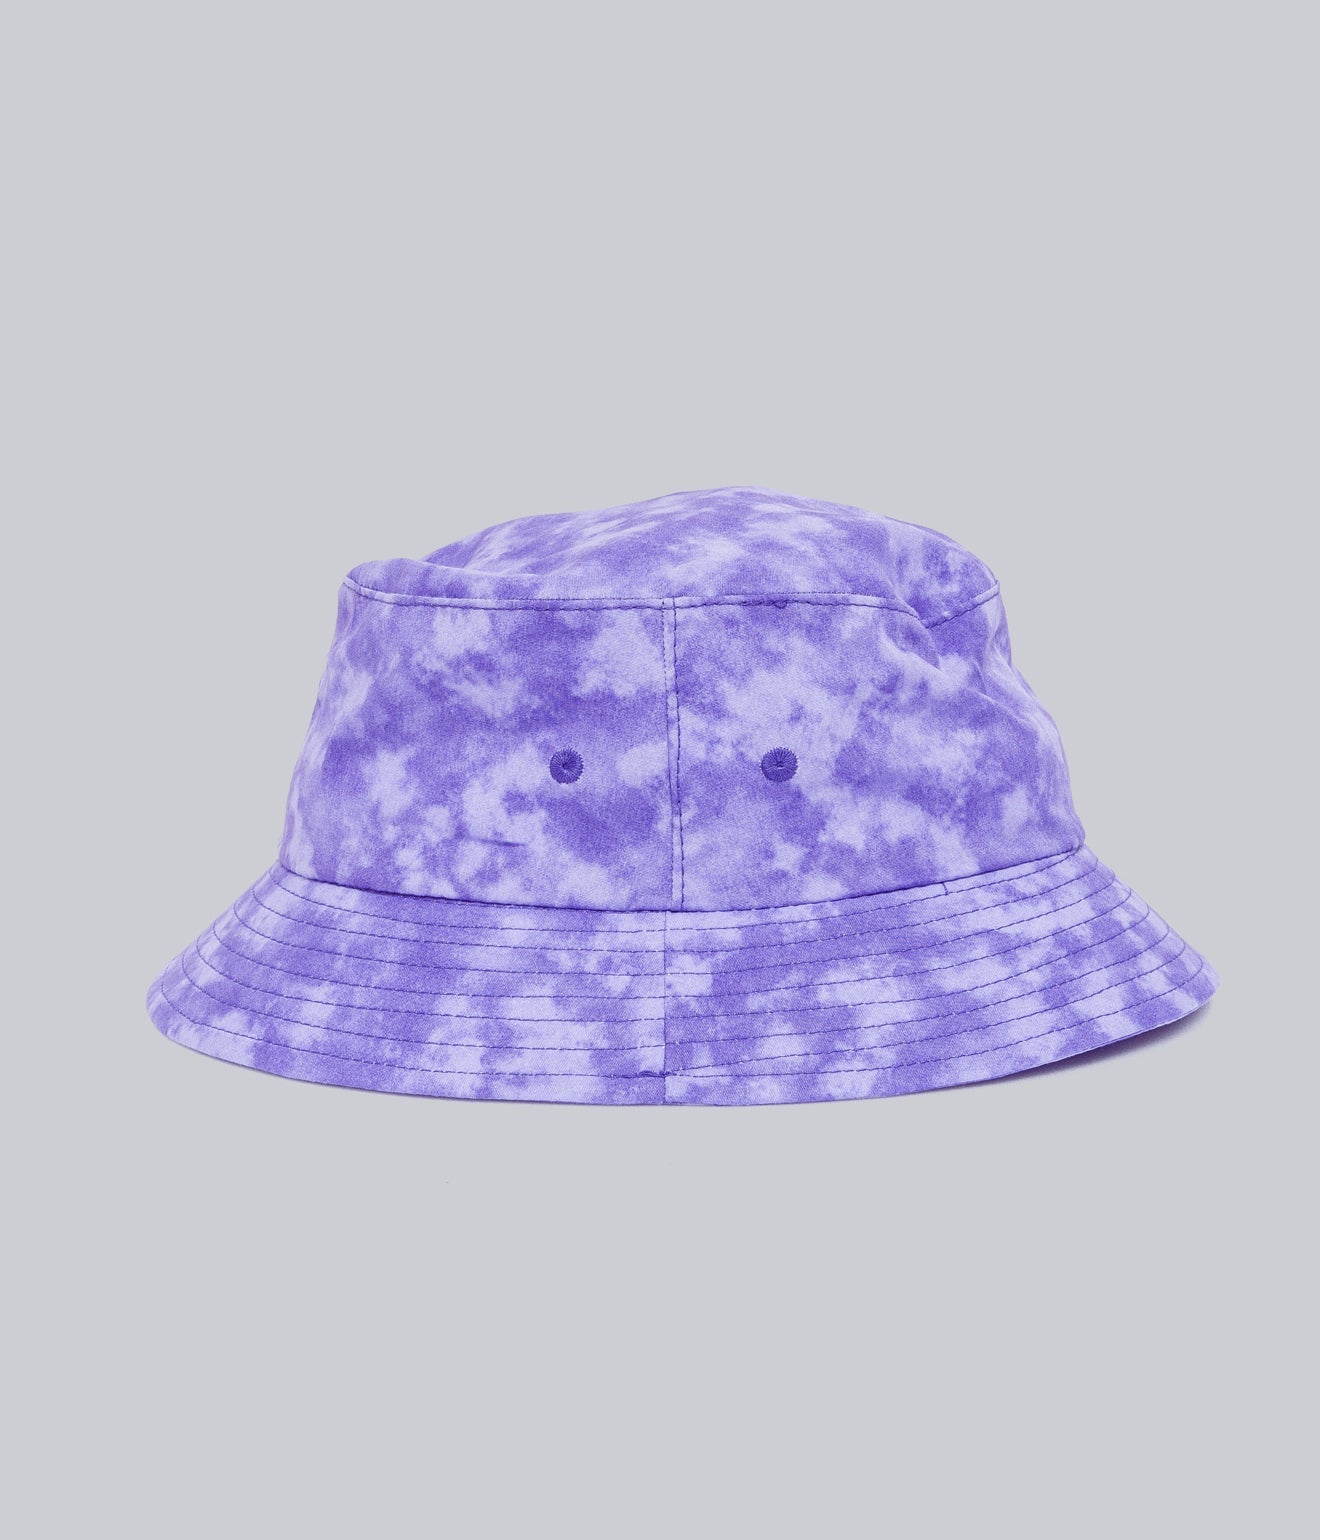 LITE YEAR "Japanese Cotton Twill Bucket Hat" Cloudy Washed Purple - WEAREALLANIMALS